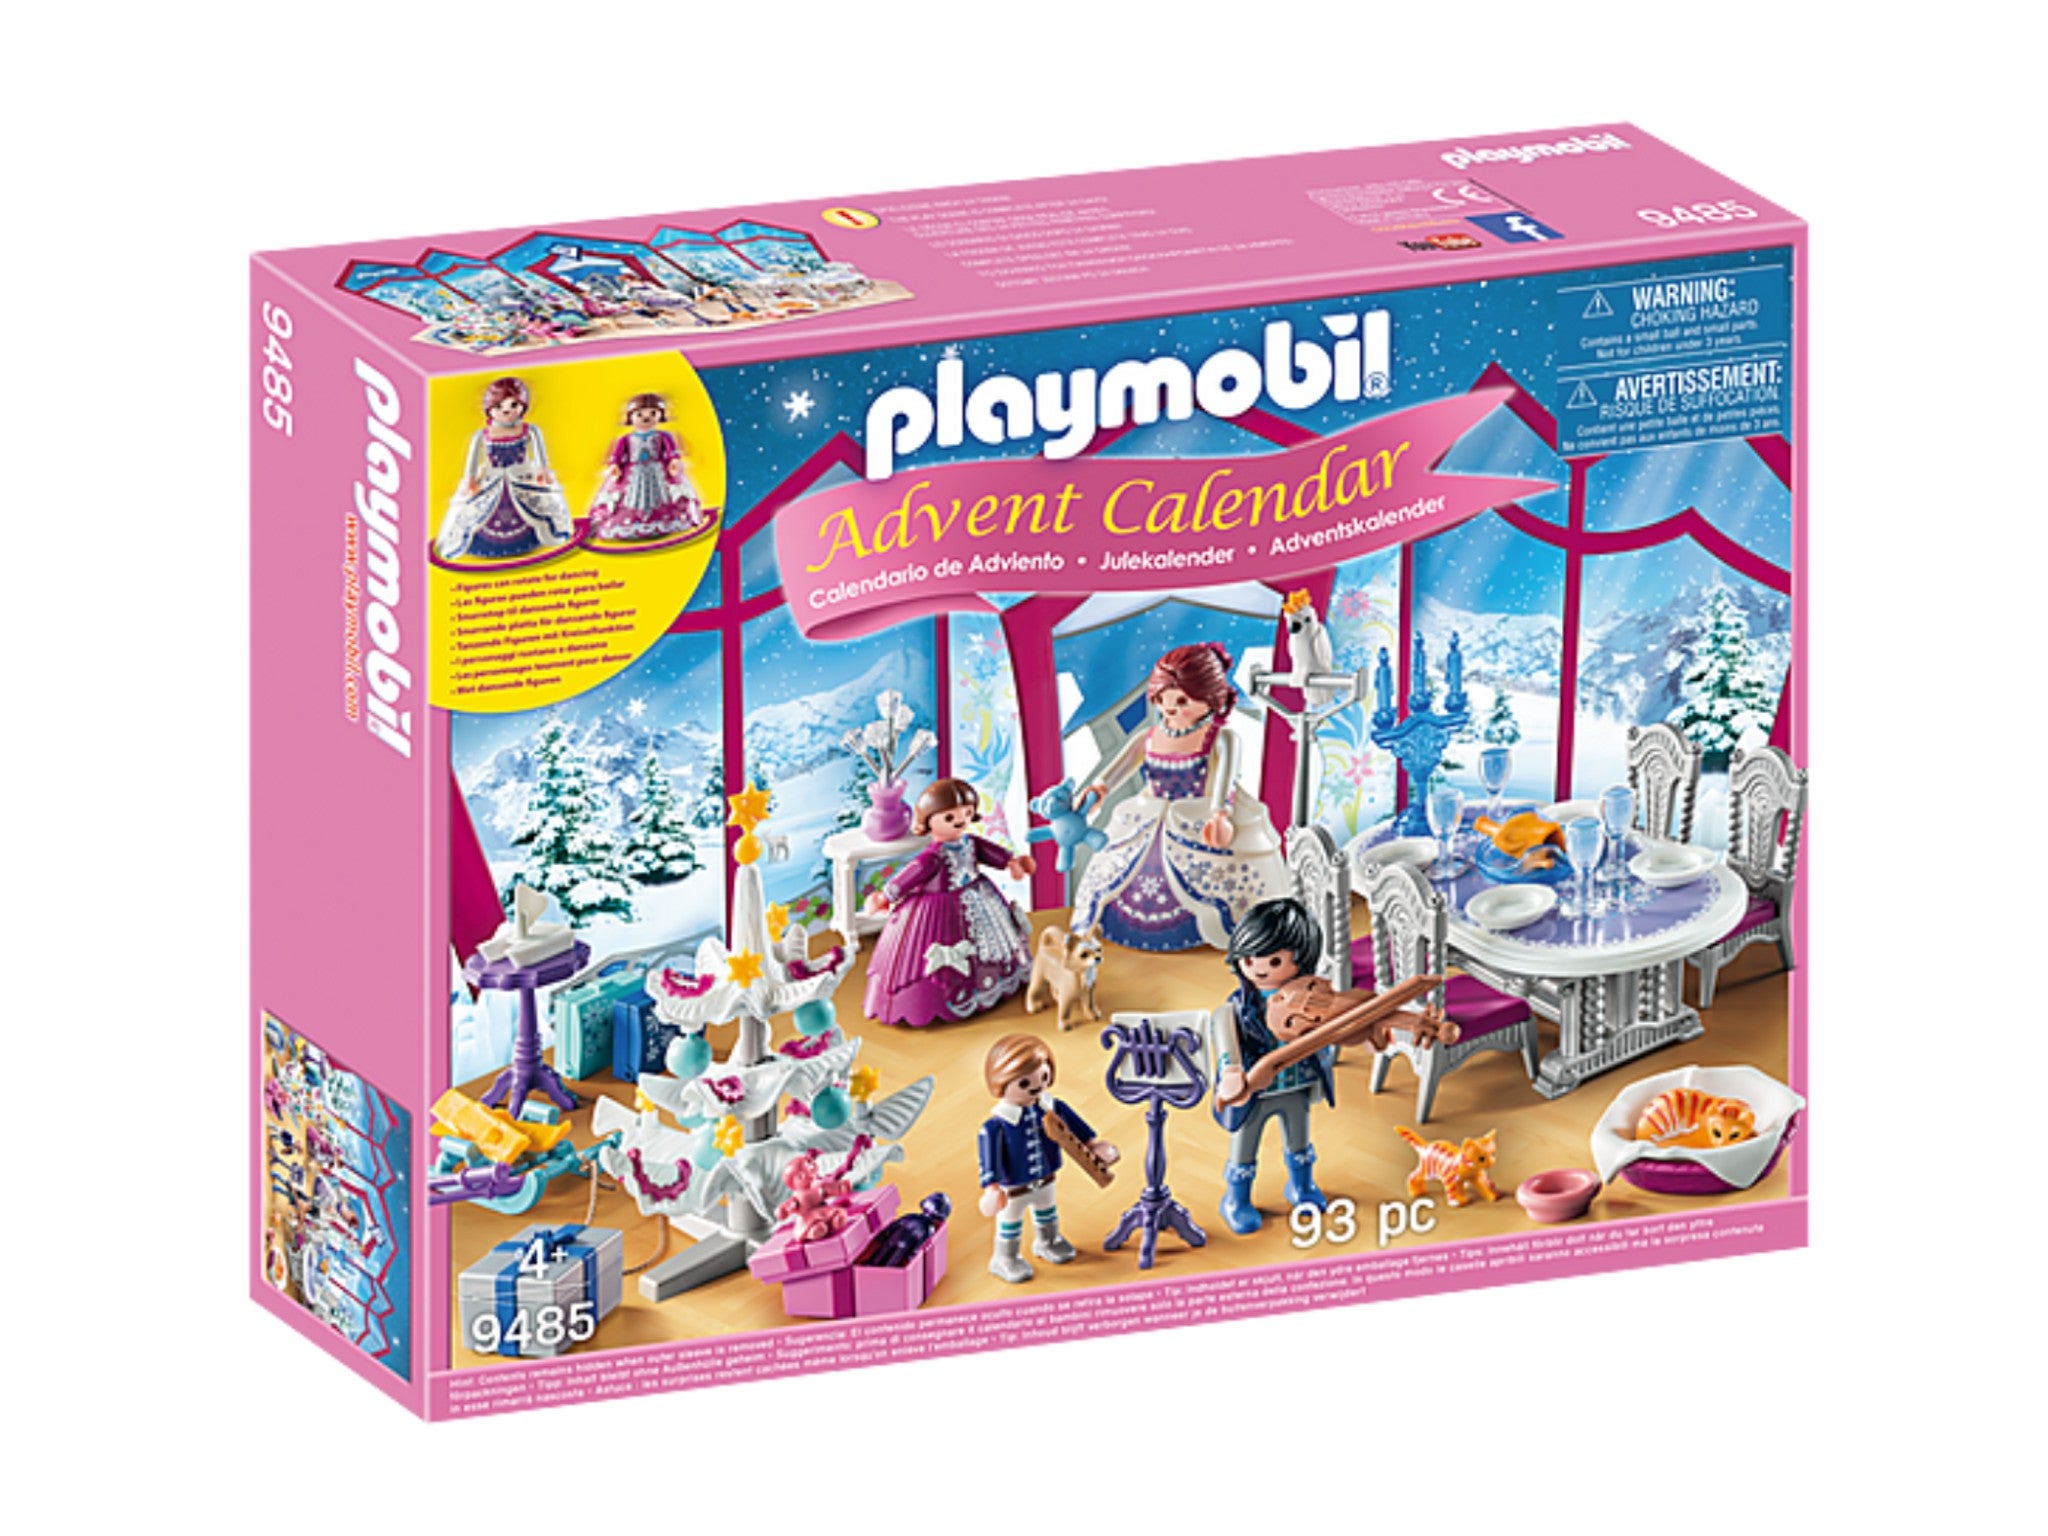 Playmobil Christmas ball 9485  indybest.jpeg